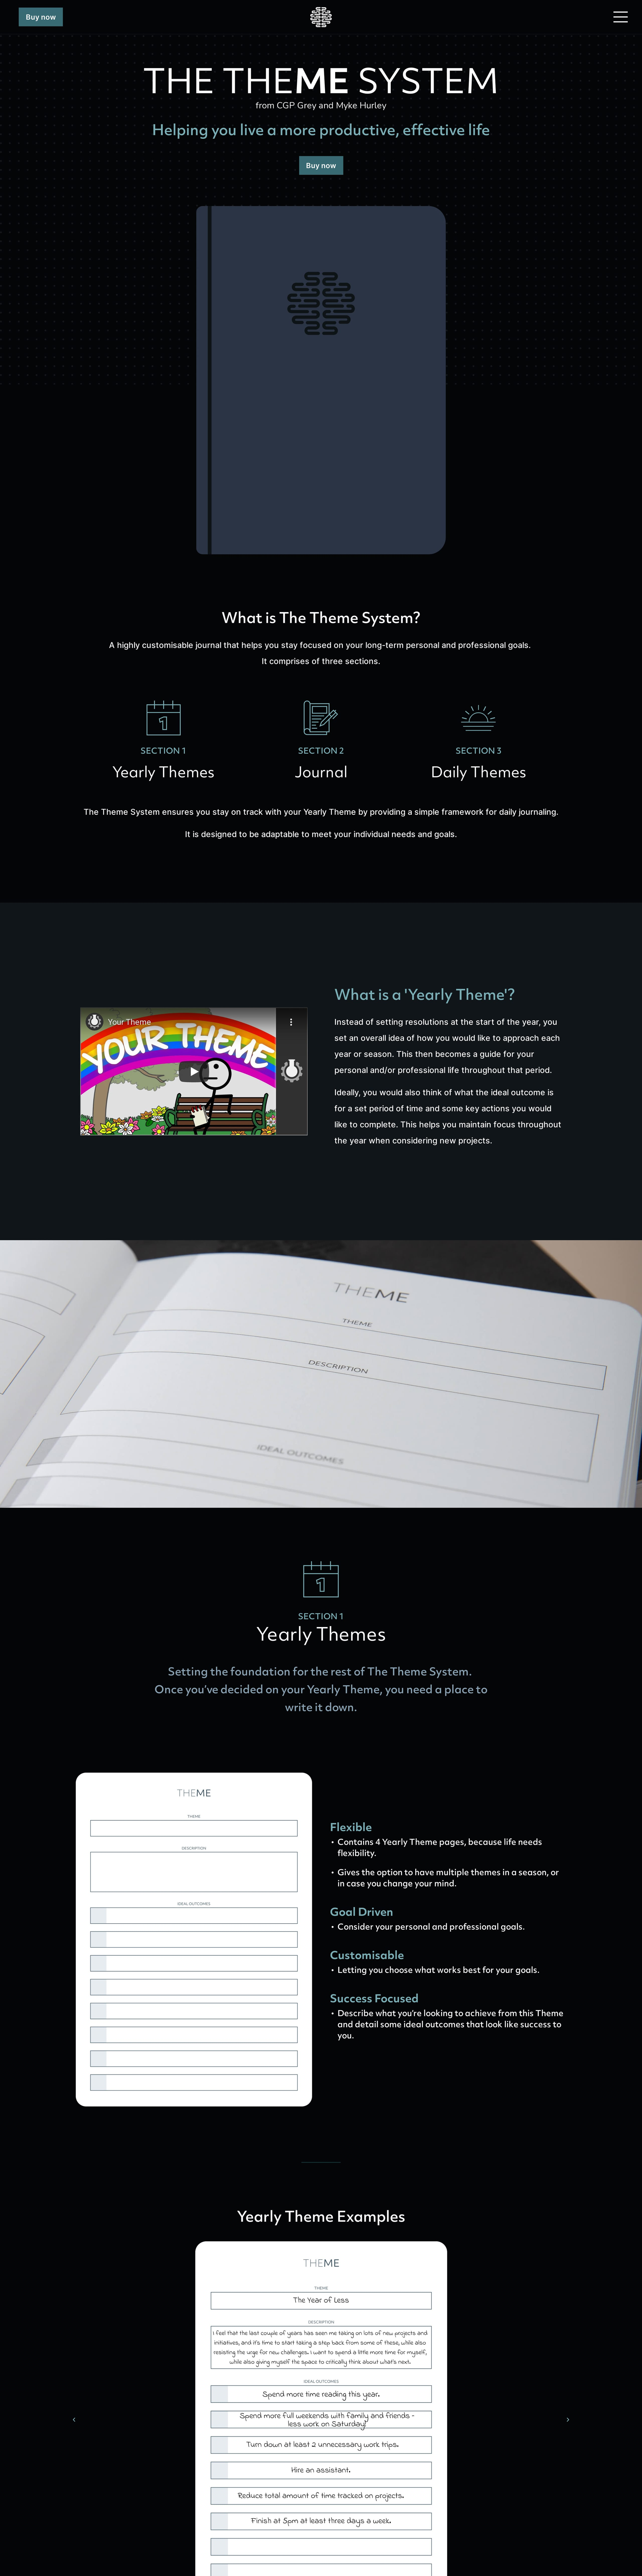 The Theme System Website Screenshot